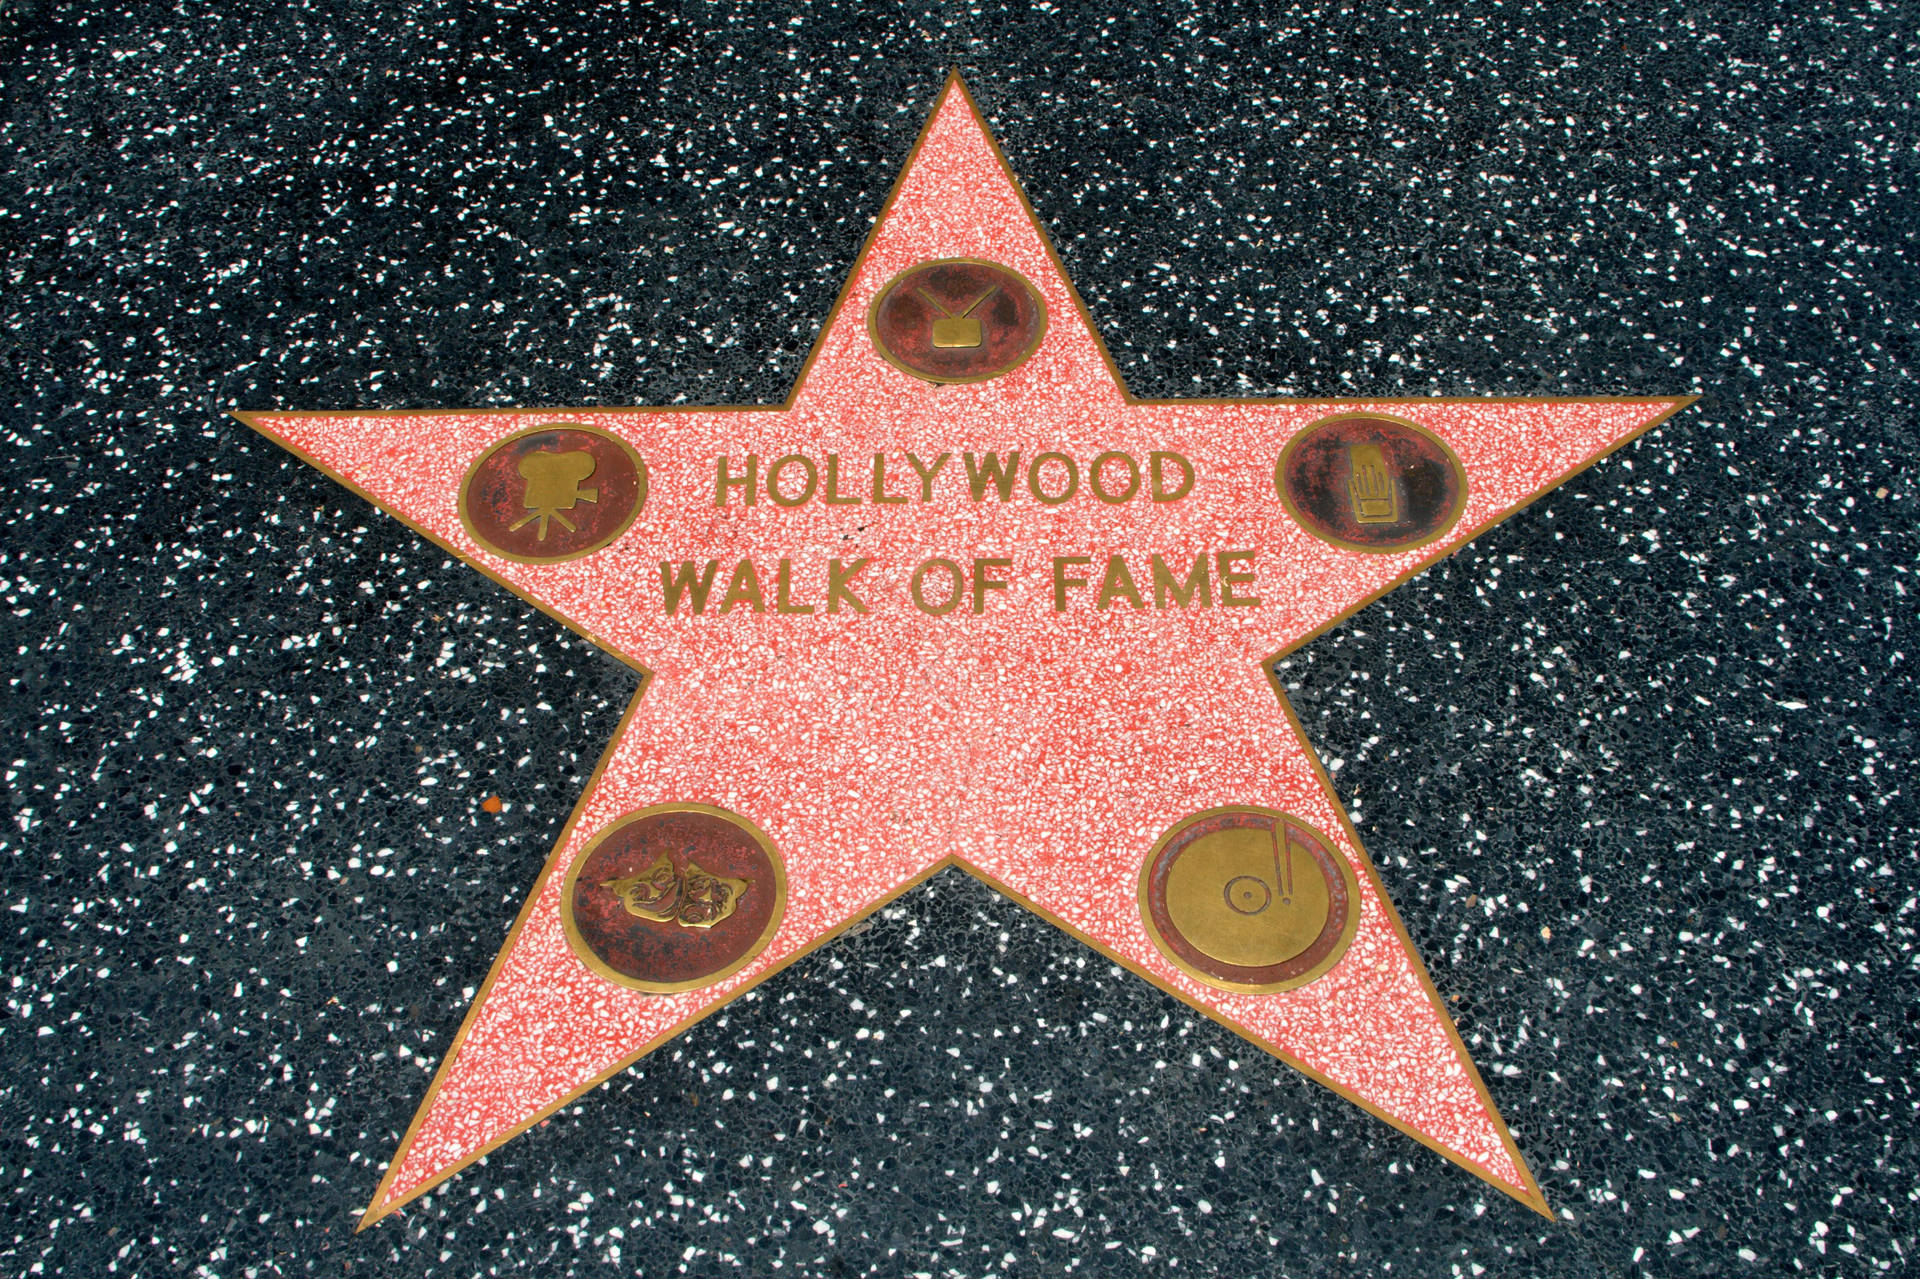 Hollywood Walk Of Fame Star Wallpaper